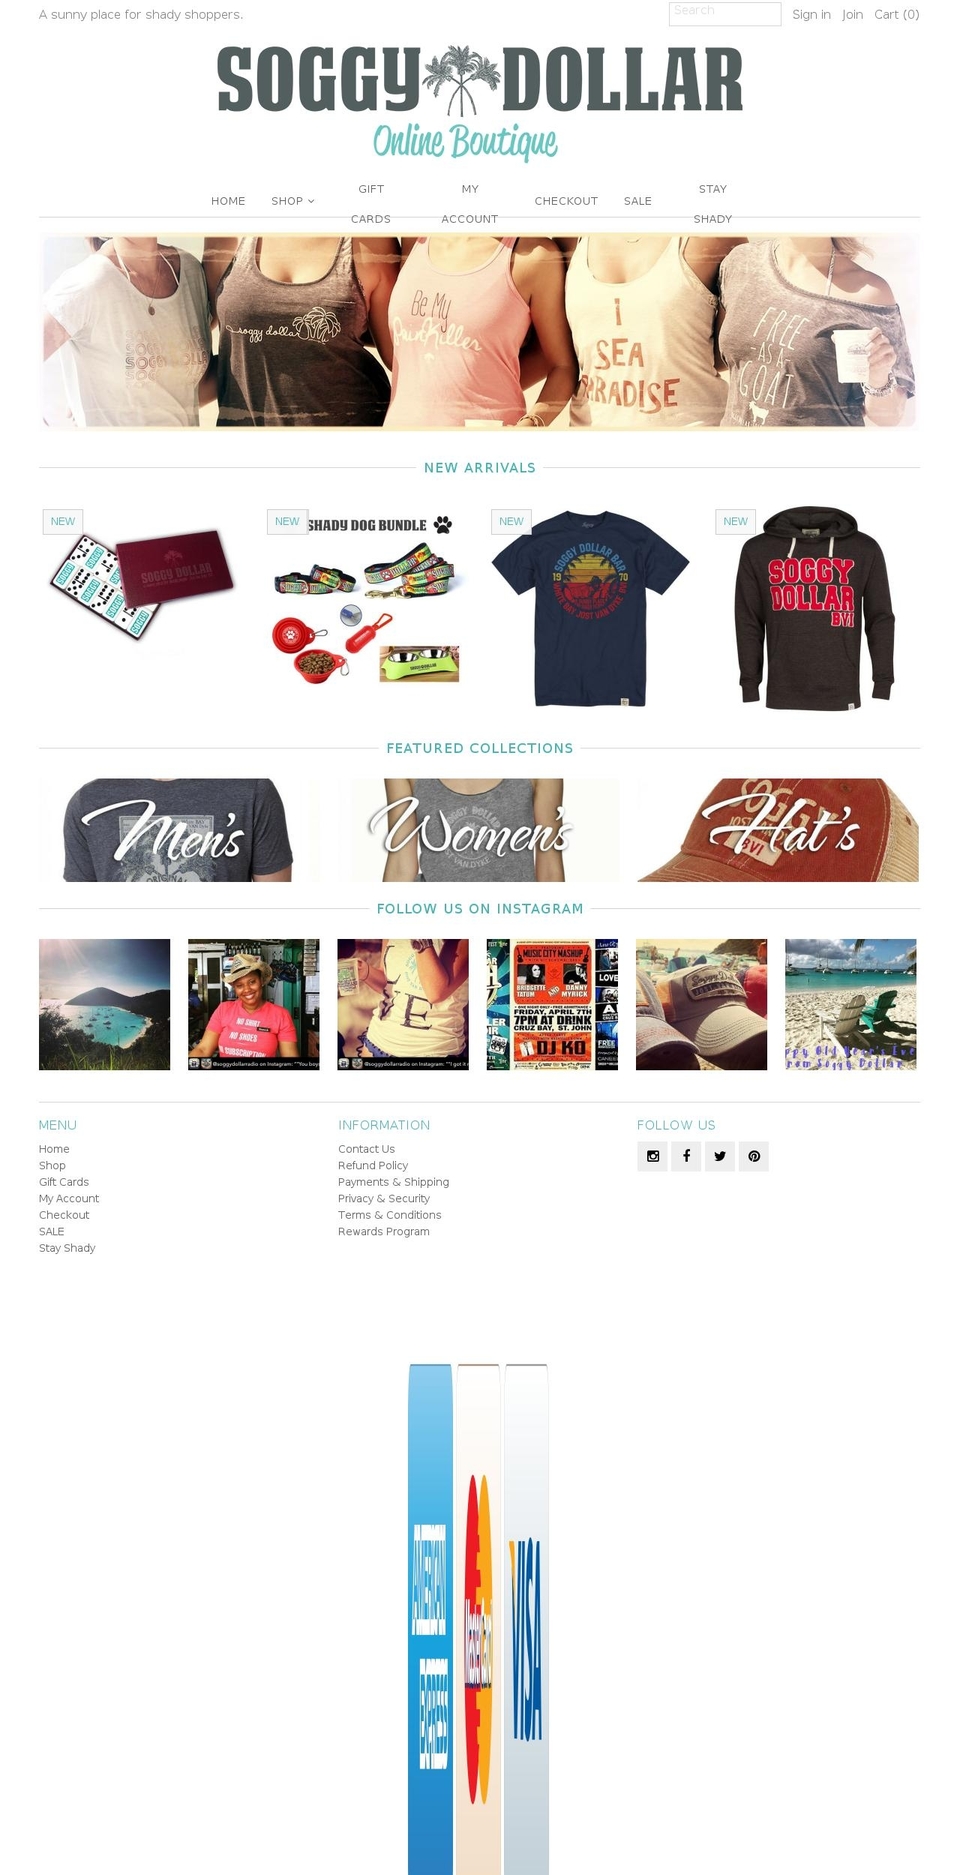 Mr Parker Shopify theme site example shopsoggy.com